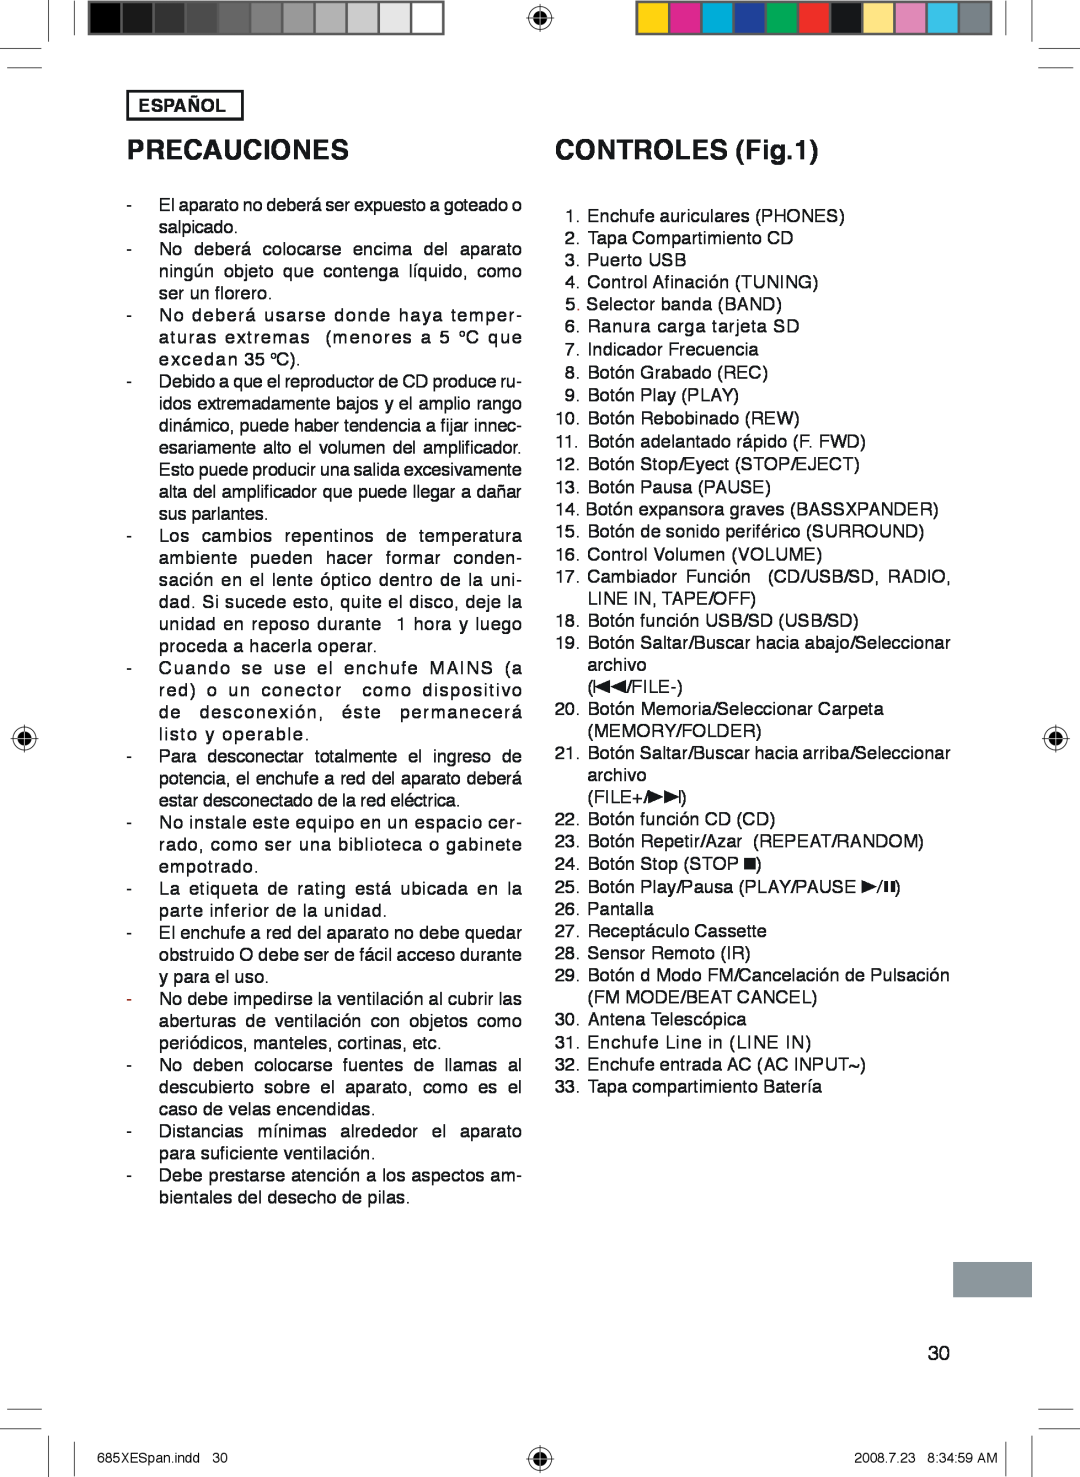 Sanyo MCD-UB685M instruction manual Precauciones, Controles, Español 